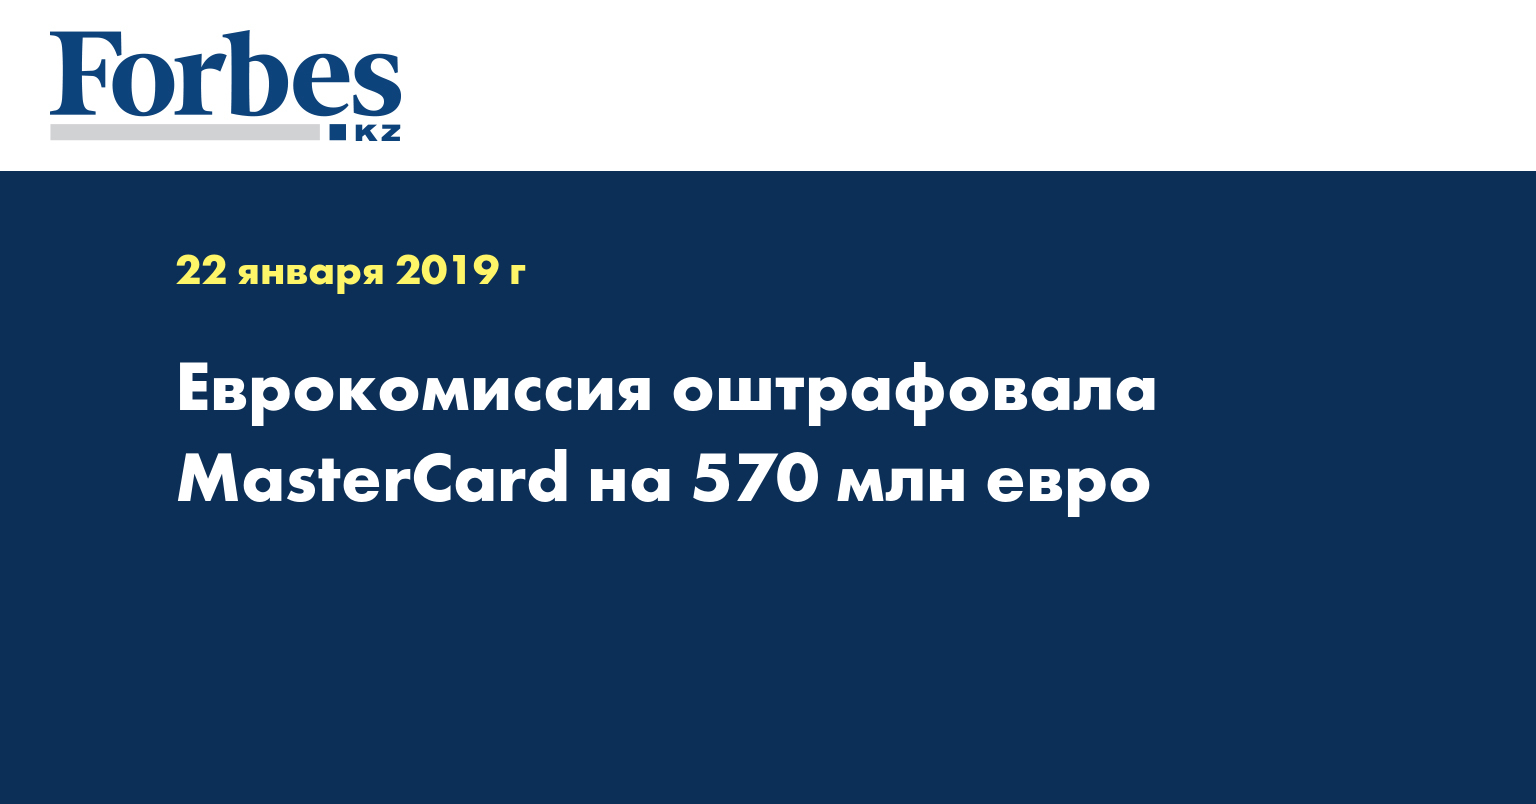 Еврокомиссия оштрафовала MasterCard на 570 млн евро